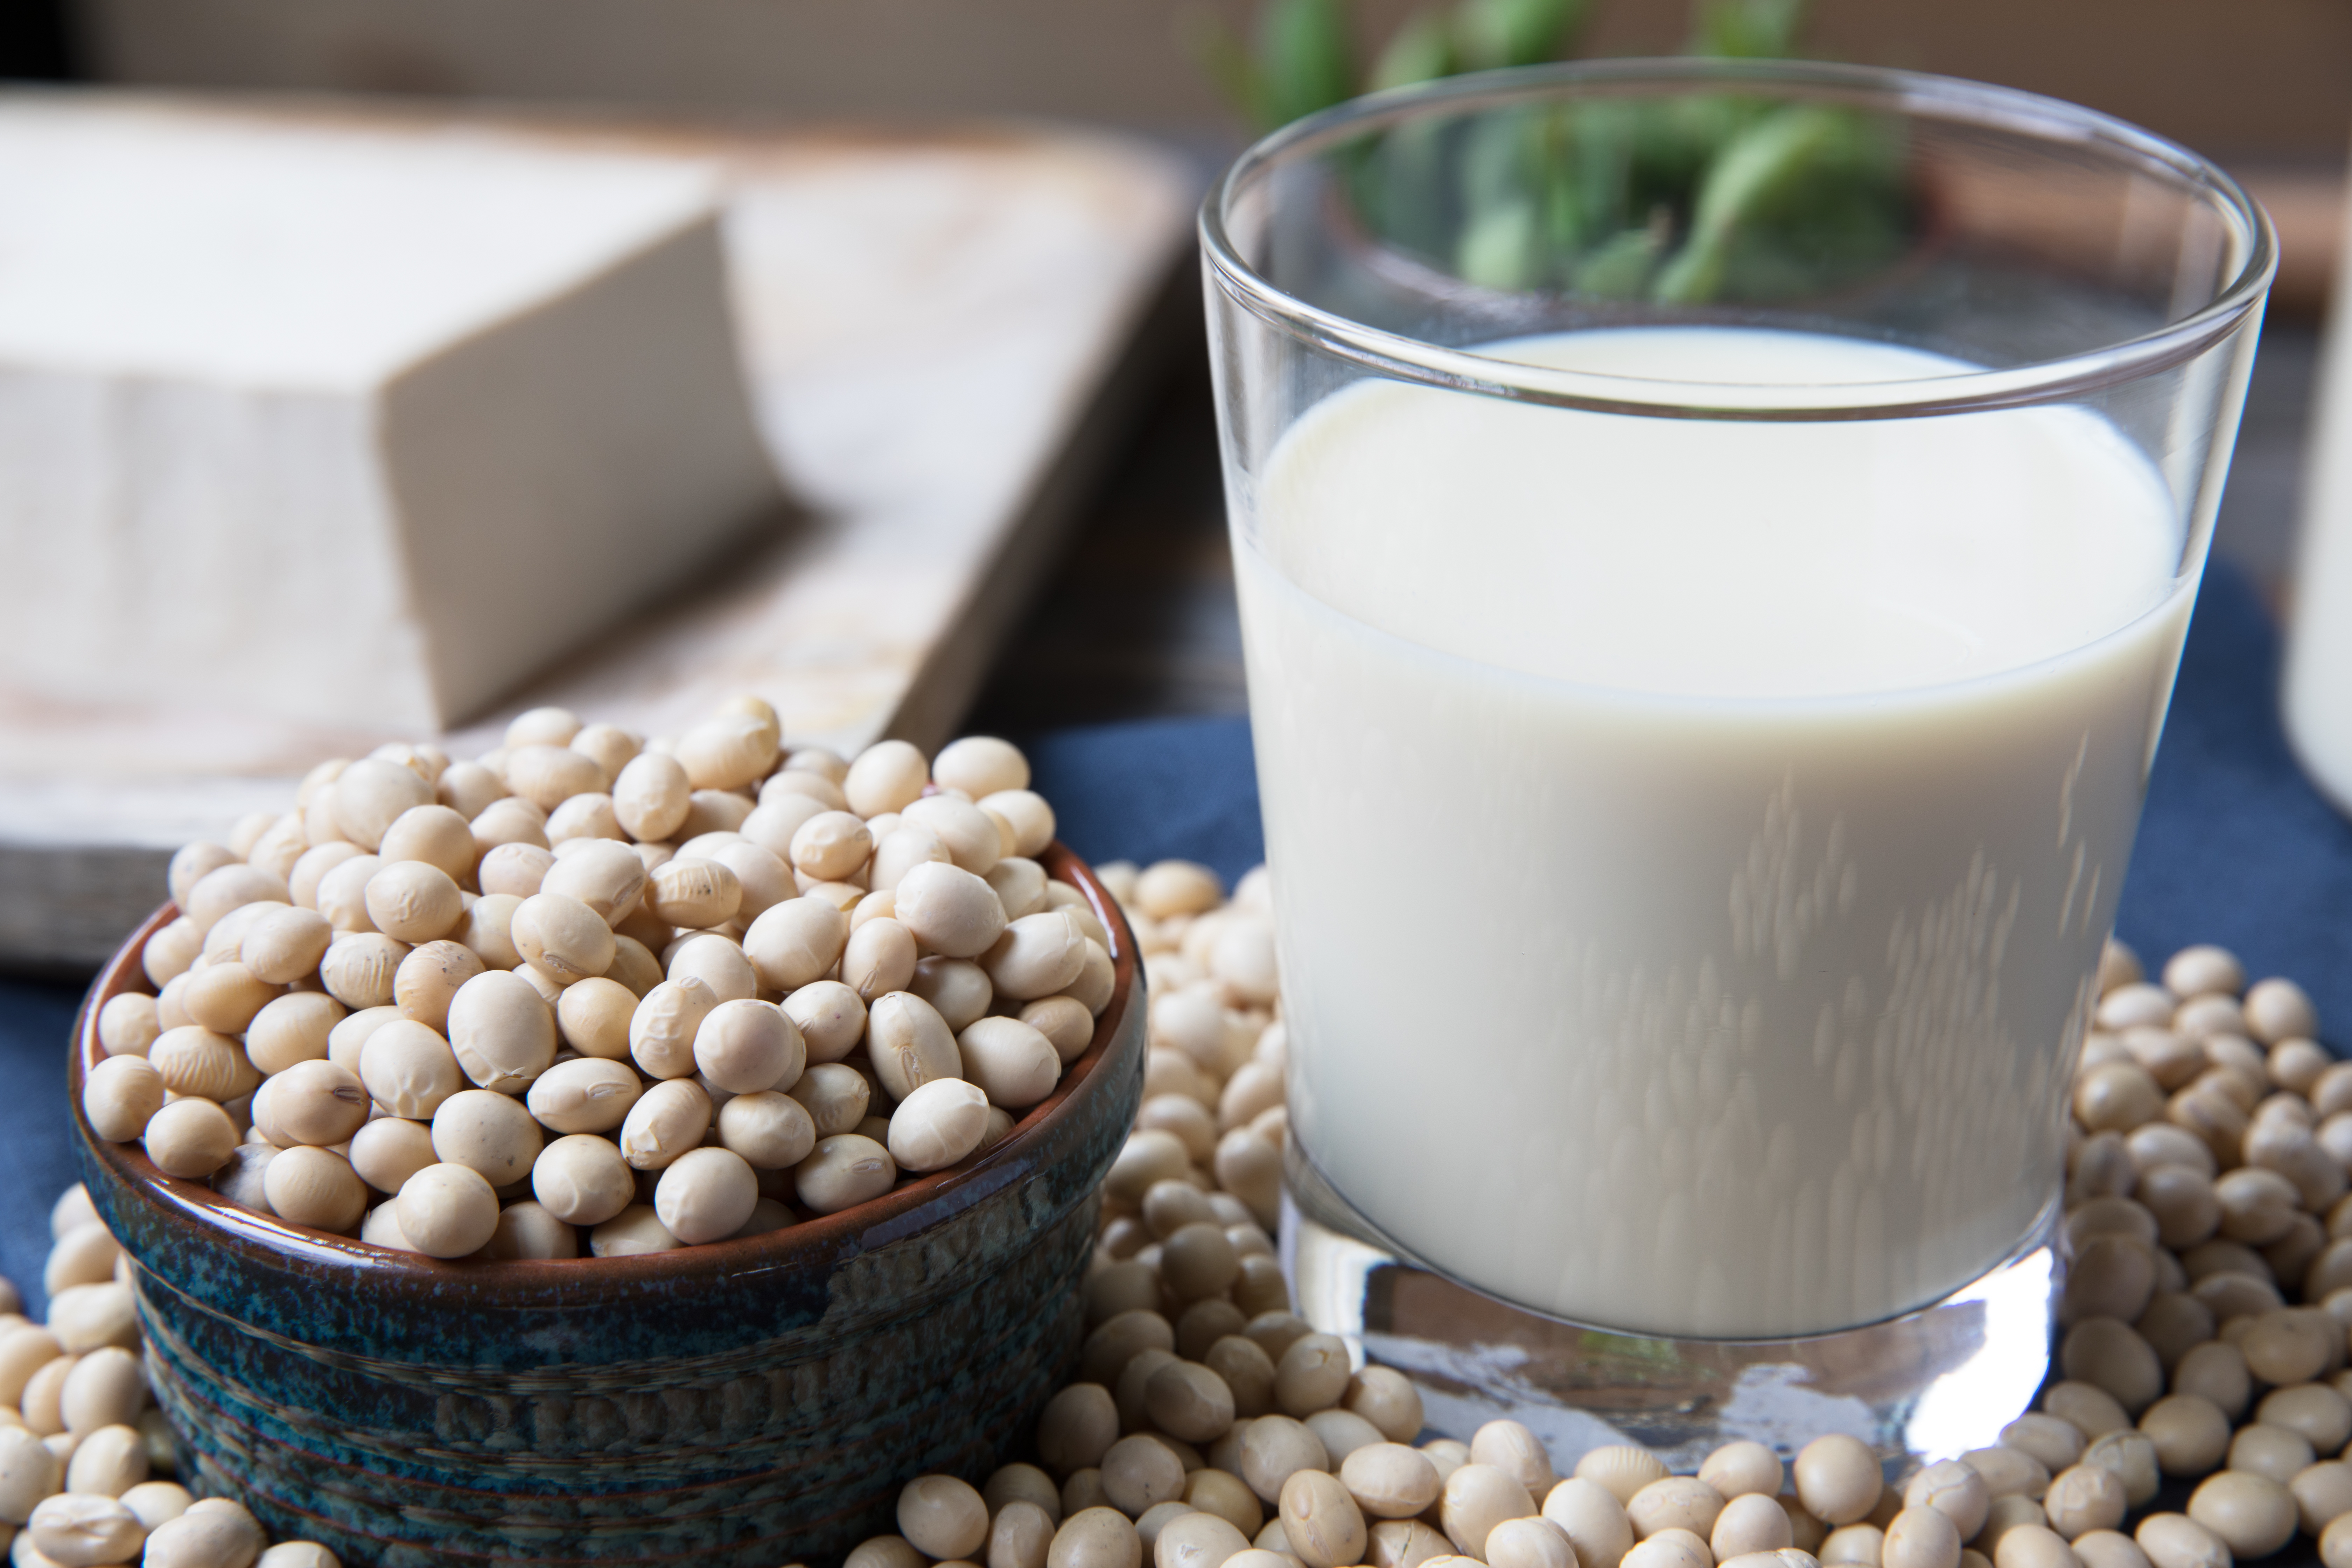 Objectif PROTEINES: De la graine crue de soja dans la ration?